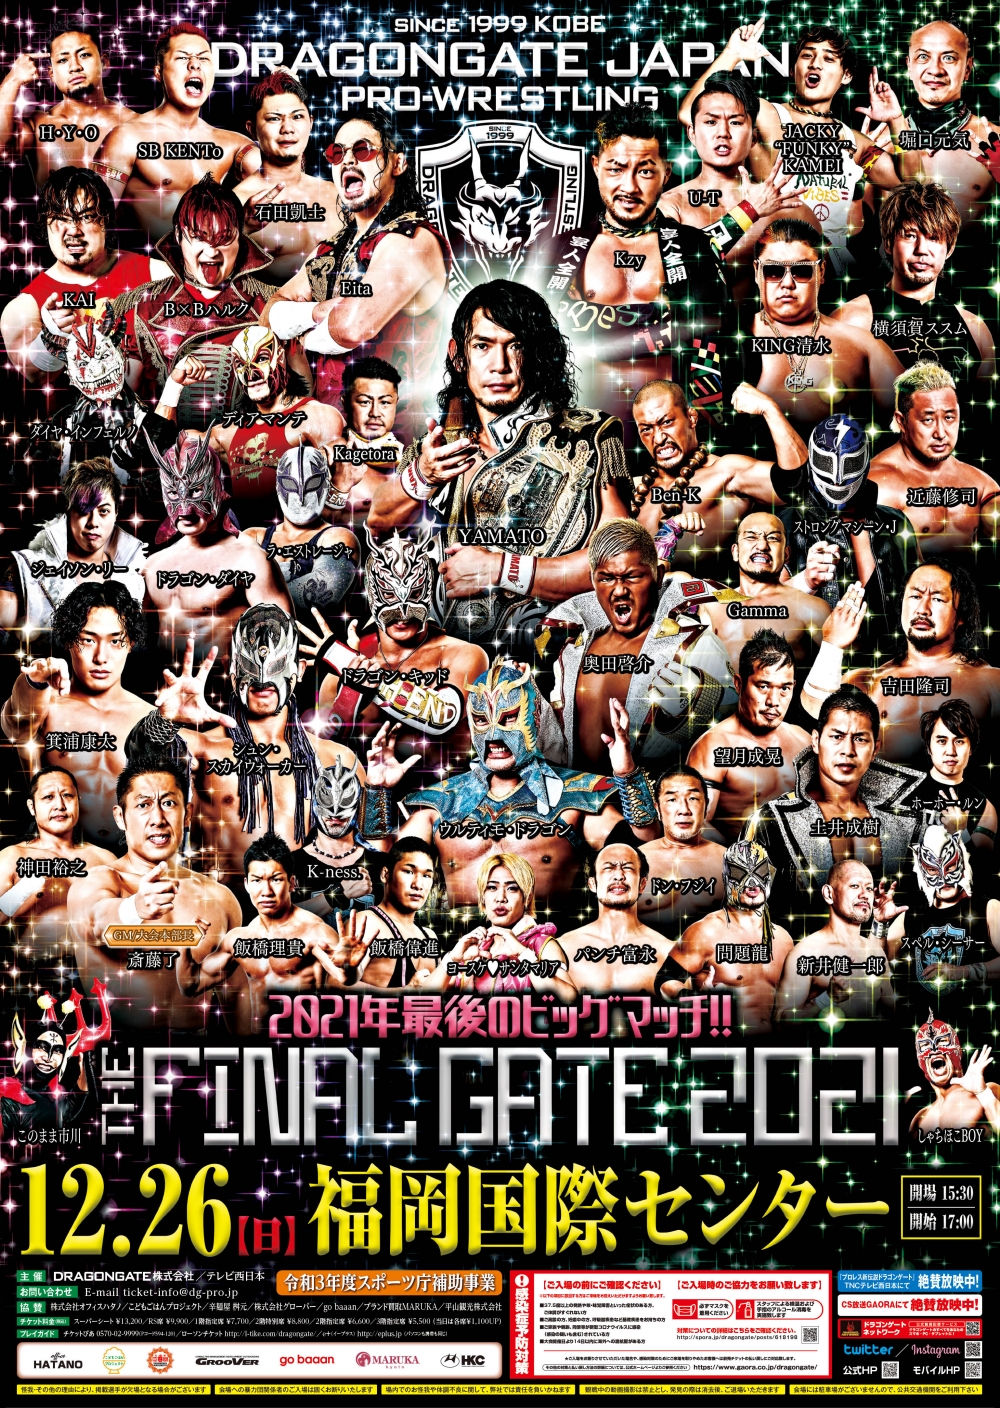 Dragon Gate The Final Gate 21 福岡国際センター イベント 試写会 Tnc テレビ西日本